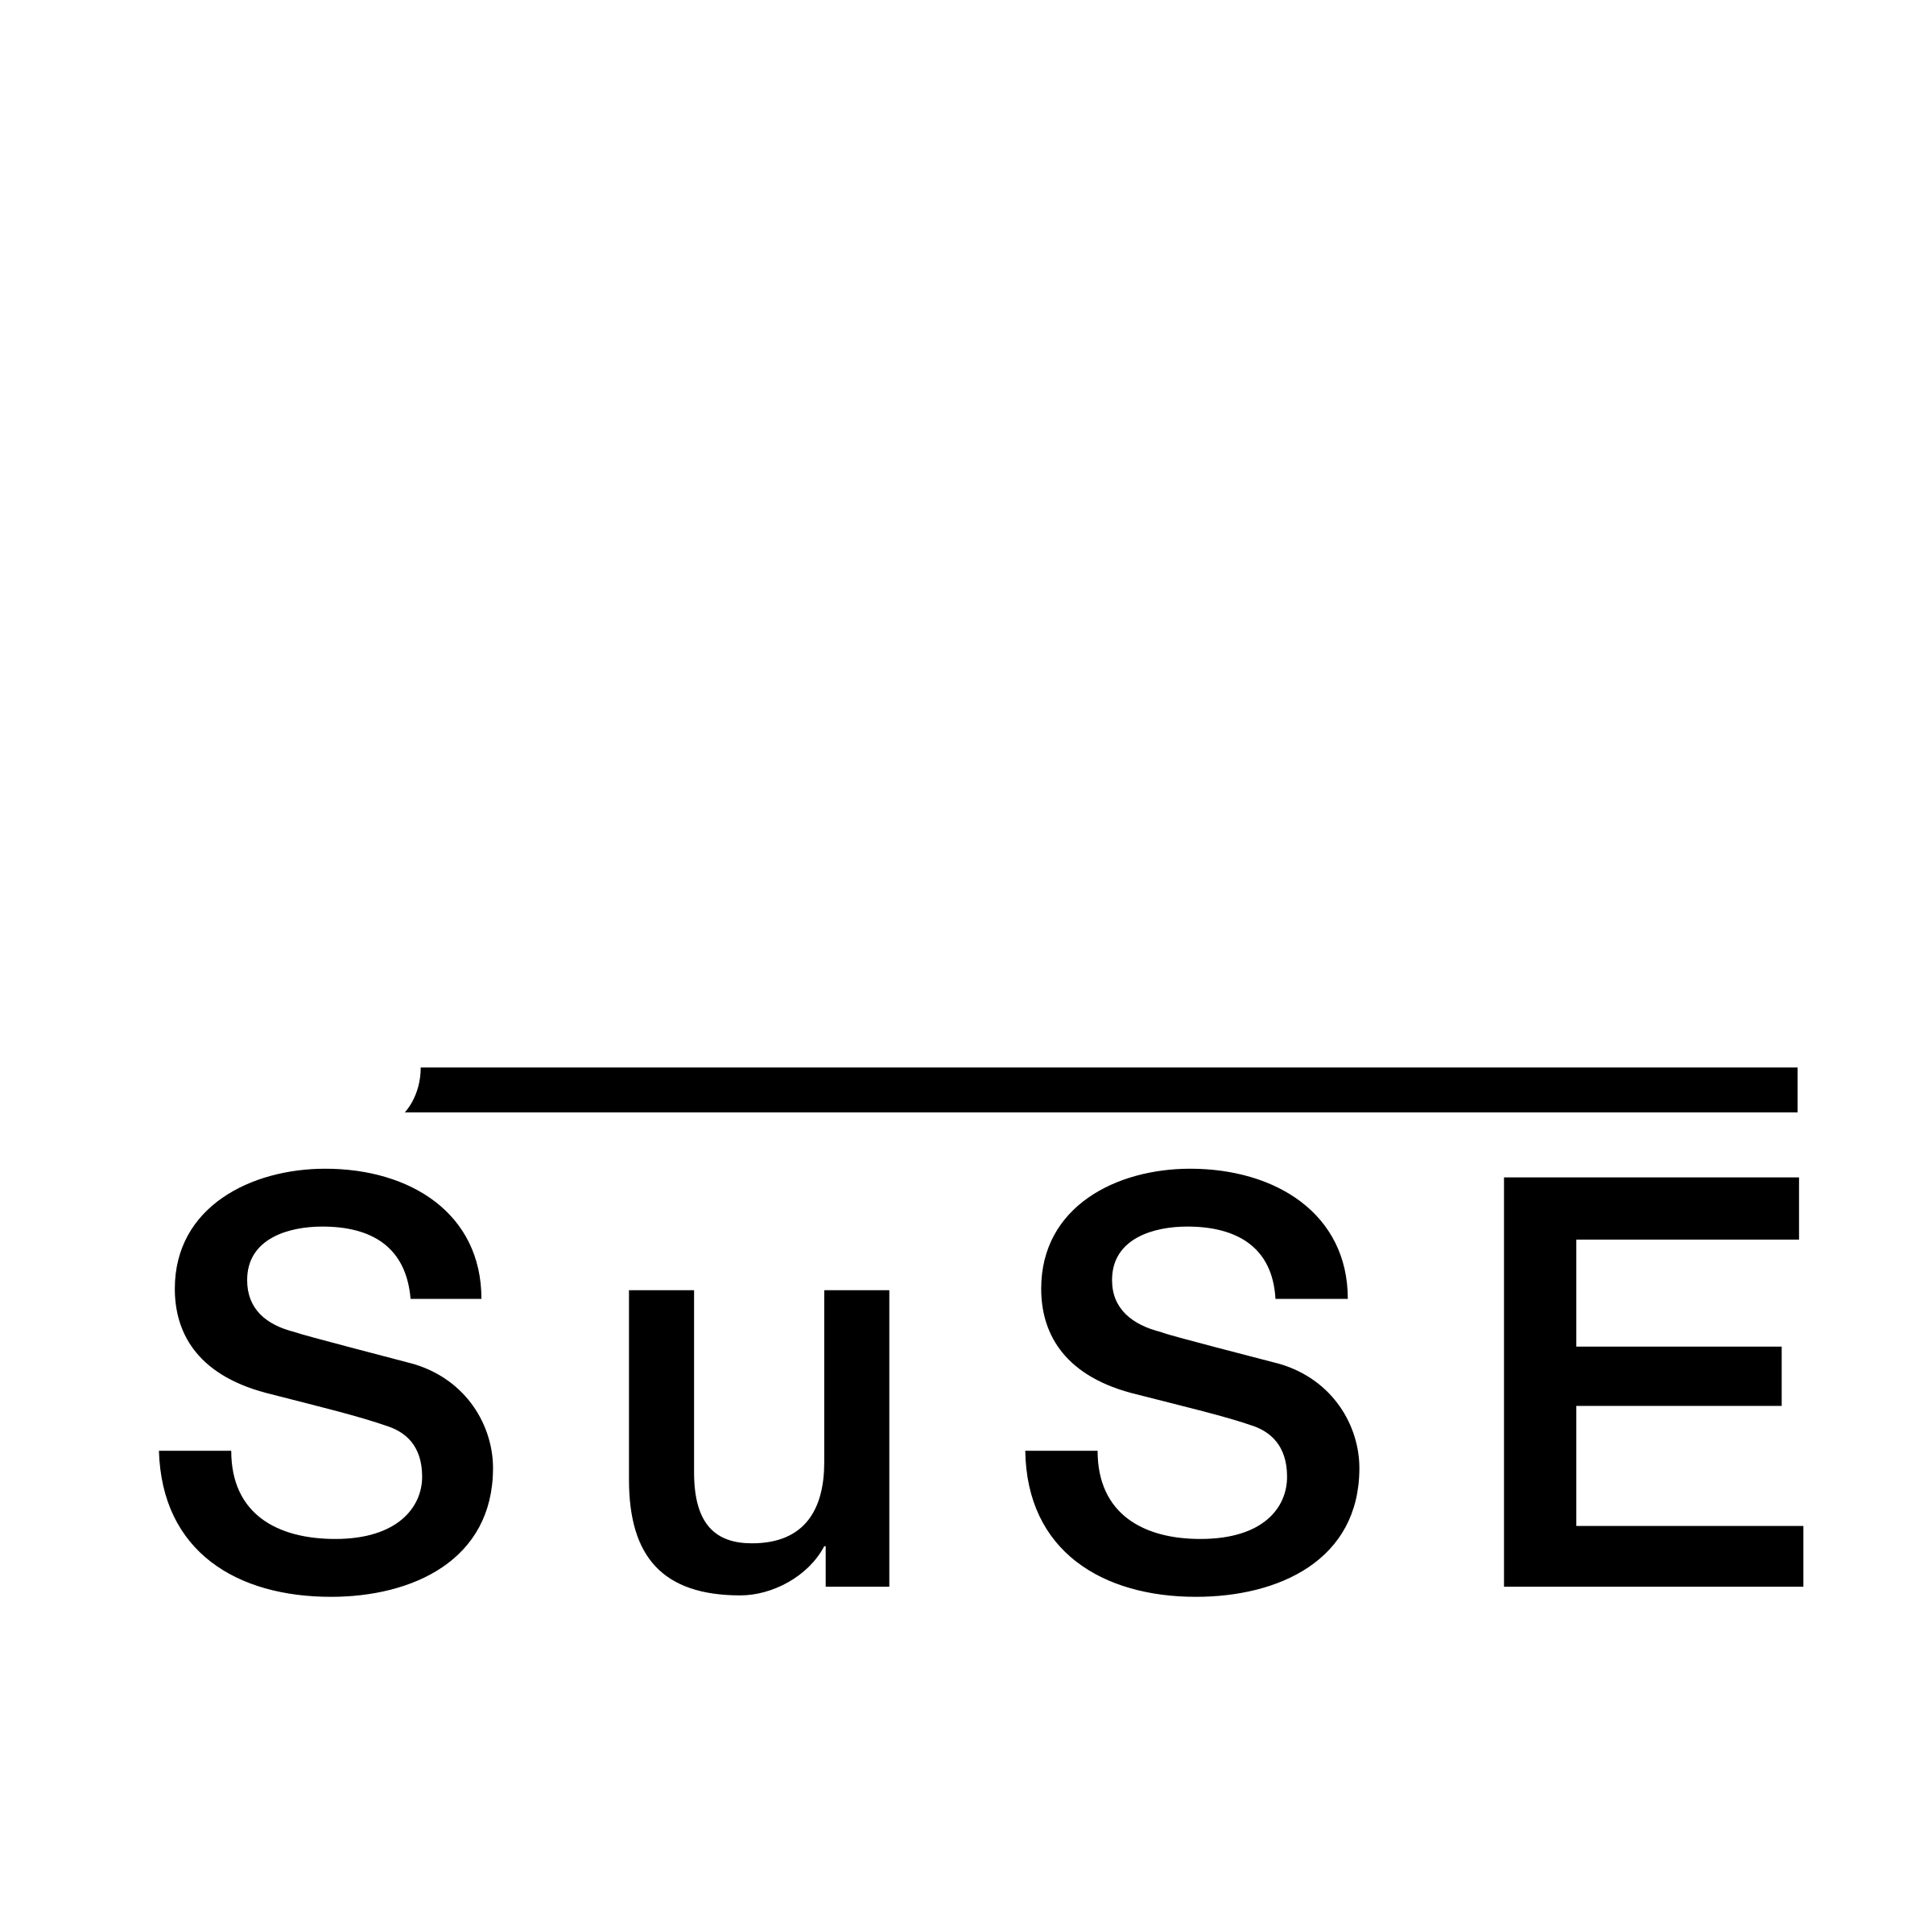 Suse Logo - SuSE Logo PNG Transparent & SVG Vector - Freebie Supply